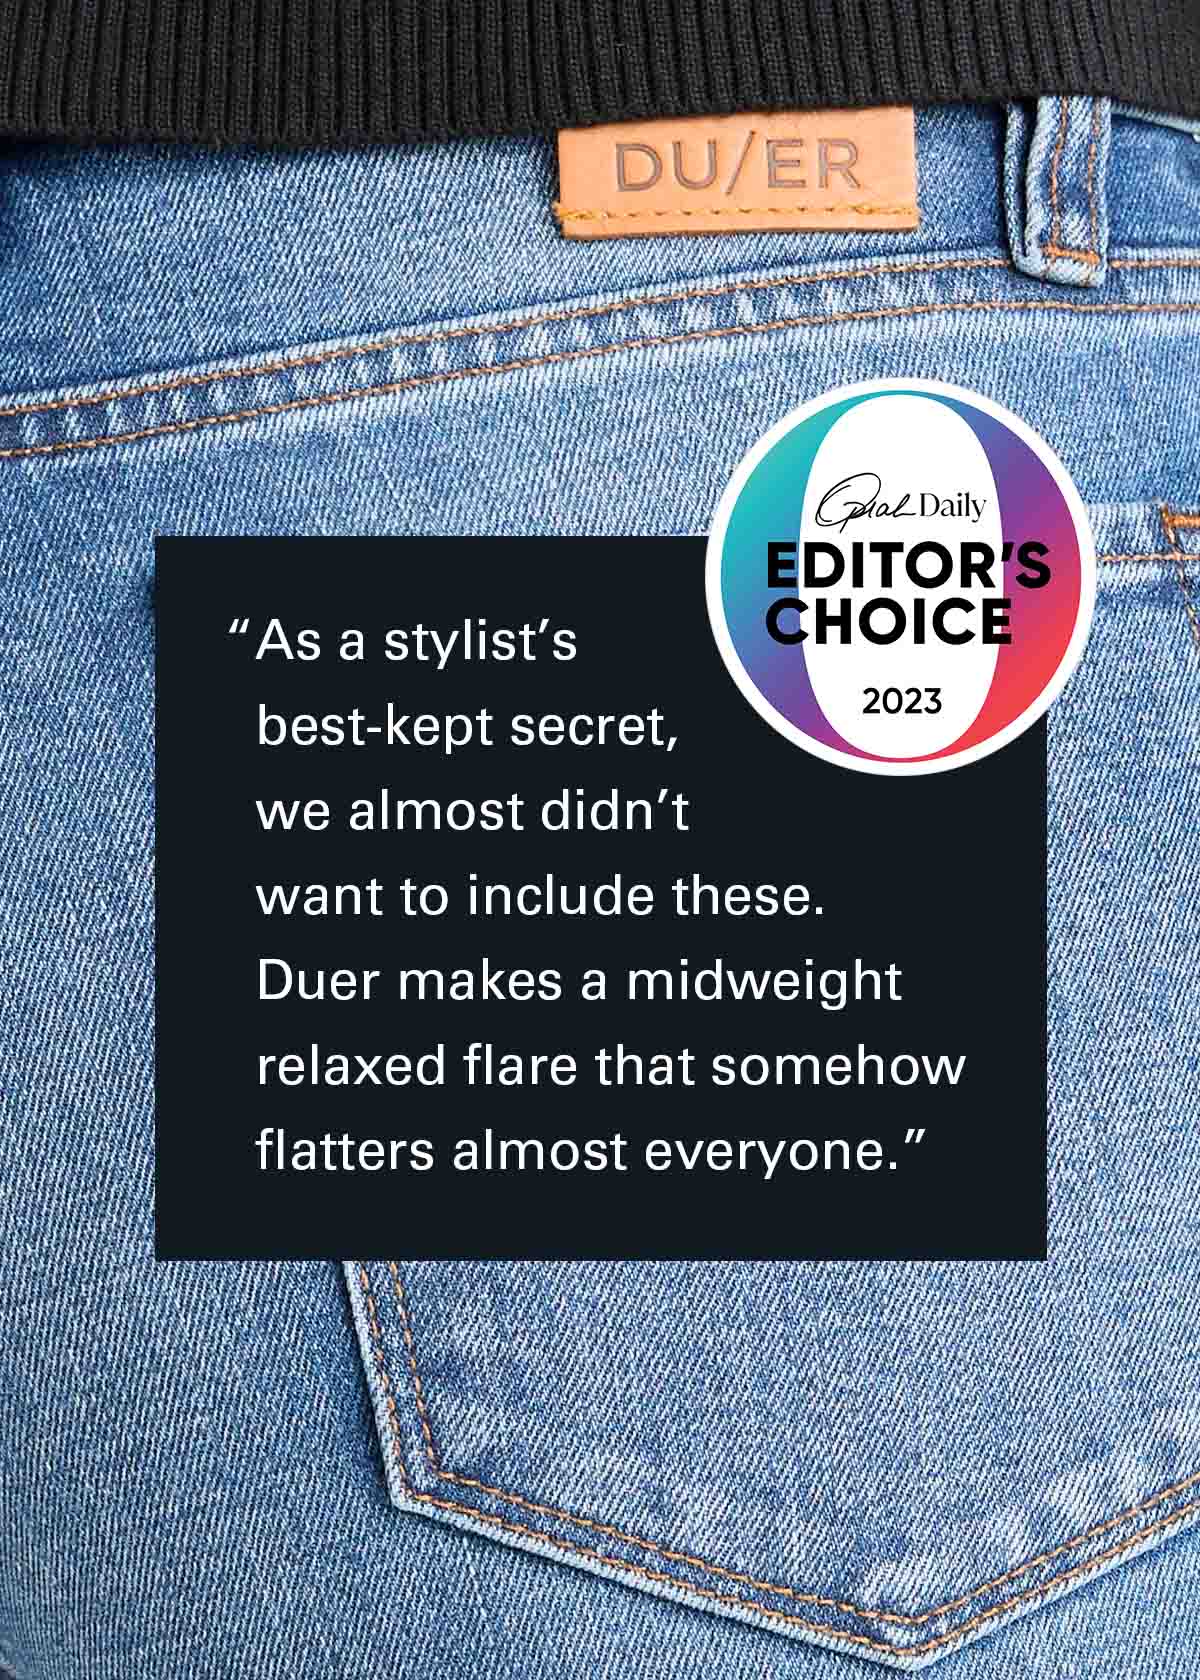 Oprah magazine Editor's Choice quote